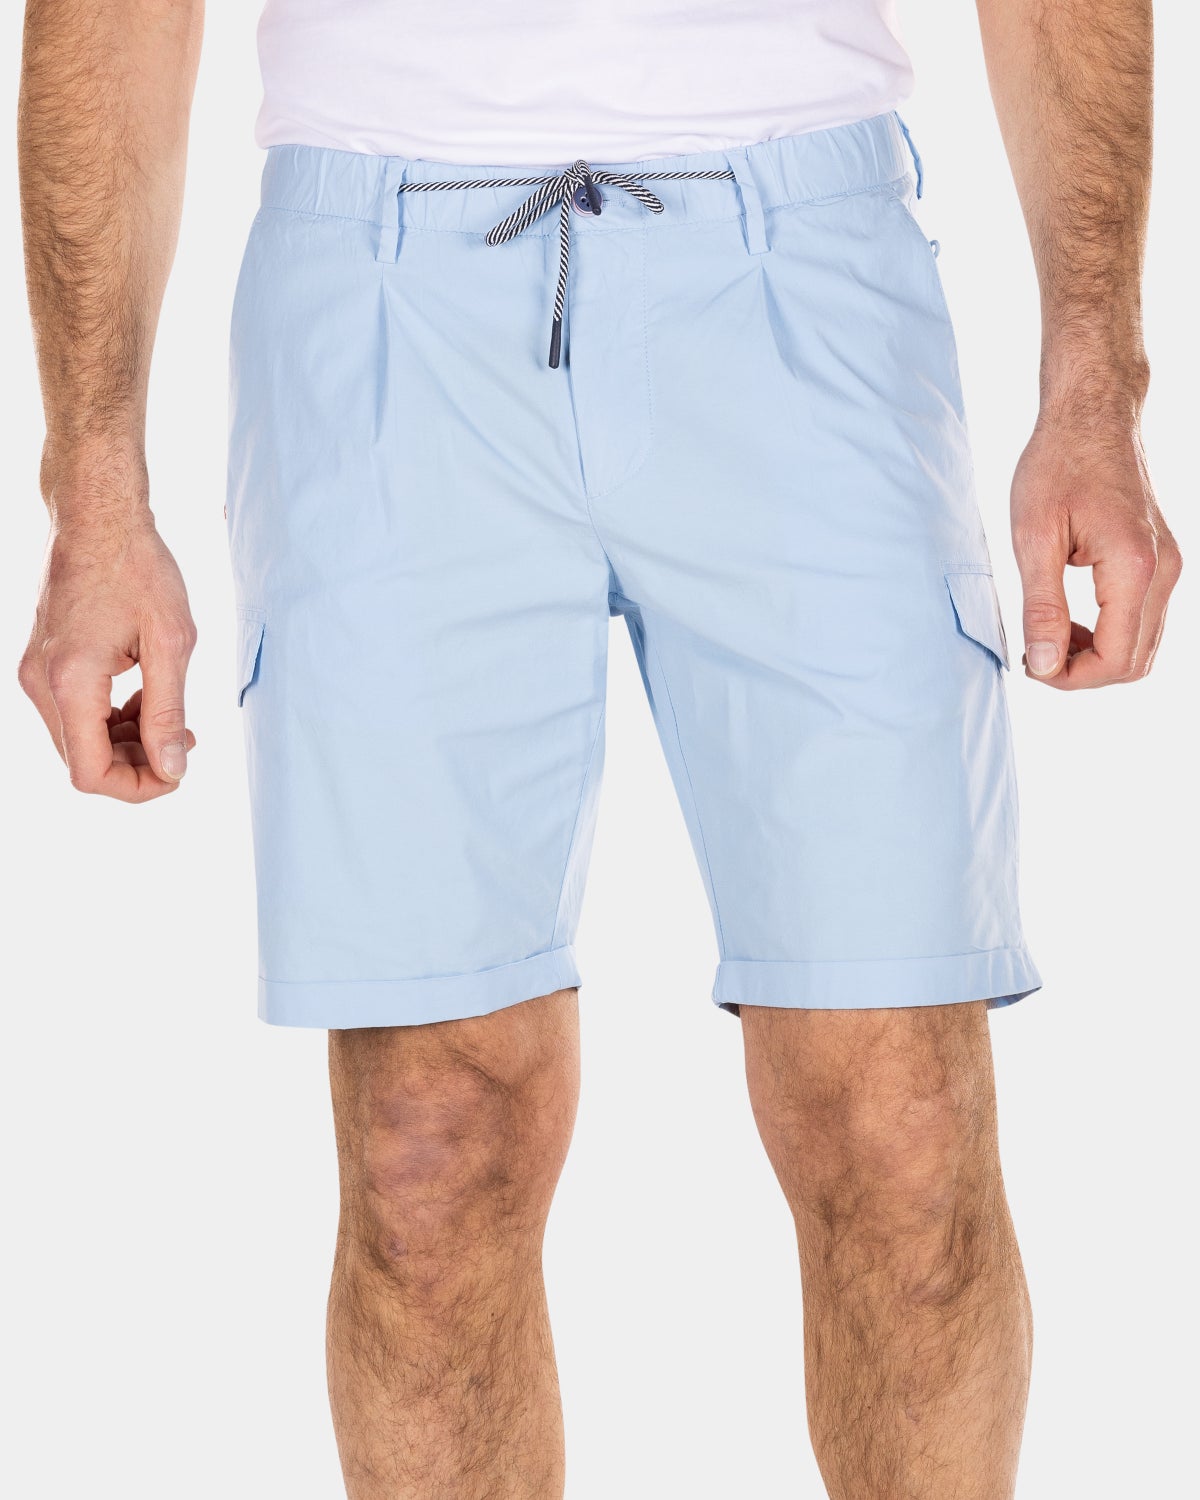 Short cargo pants - Universal Blue